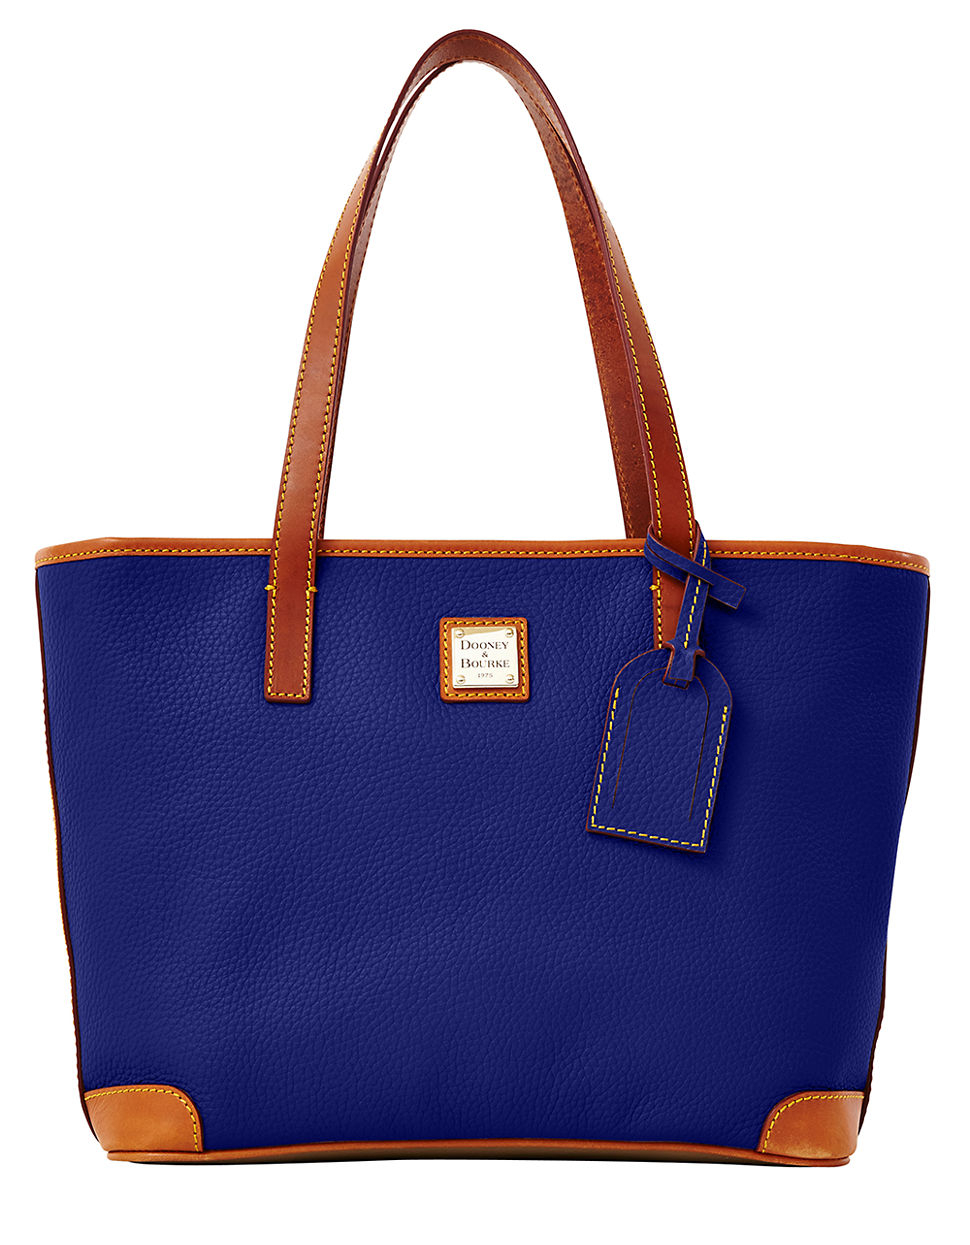 Dooney & Bourke Charleston Shopper Leather Tote Bag in Blue (Cobalt) | Lyst